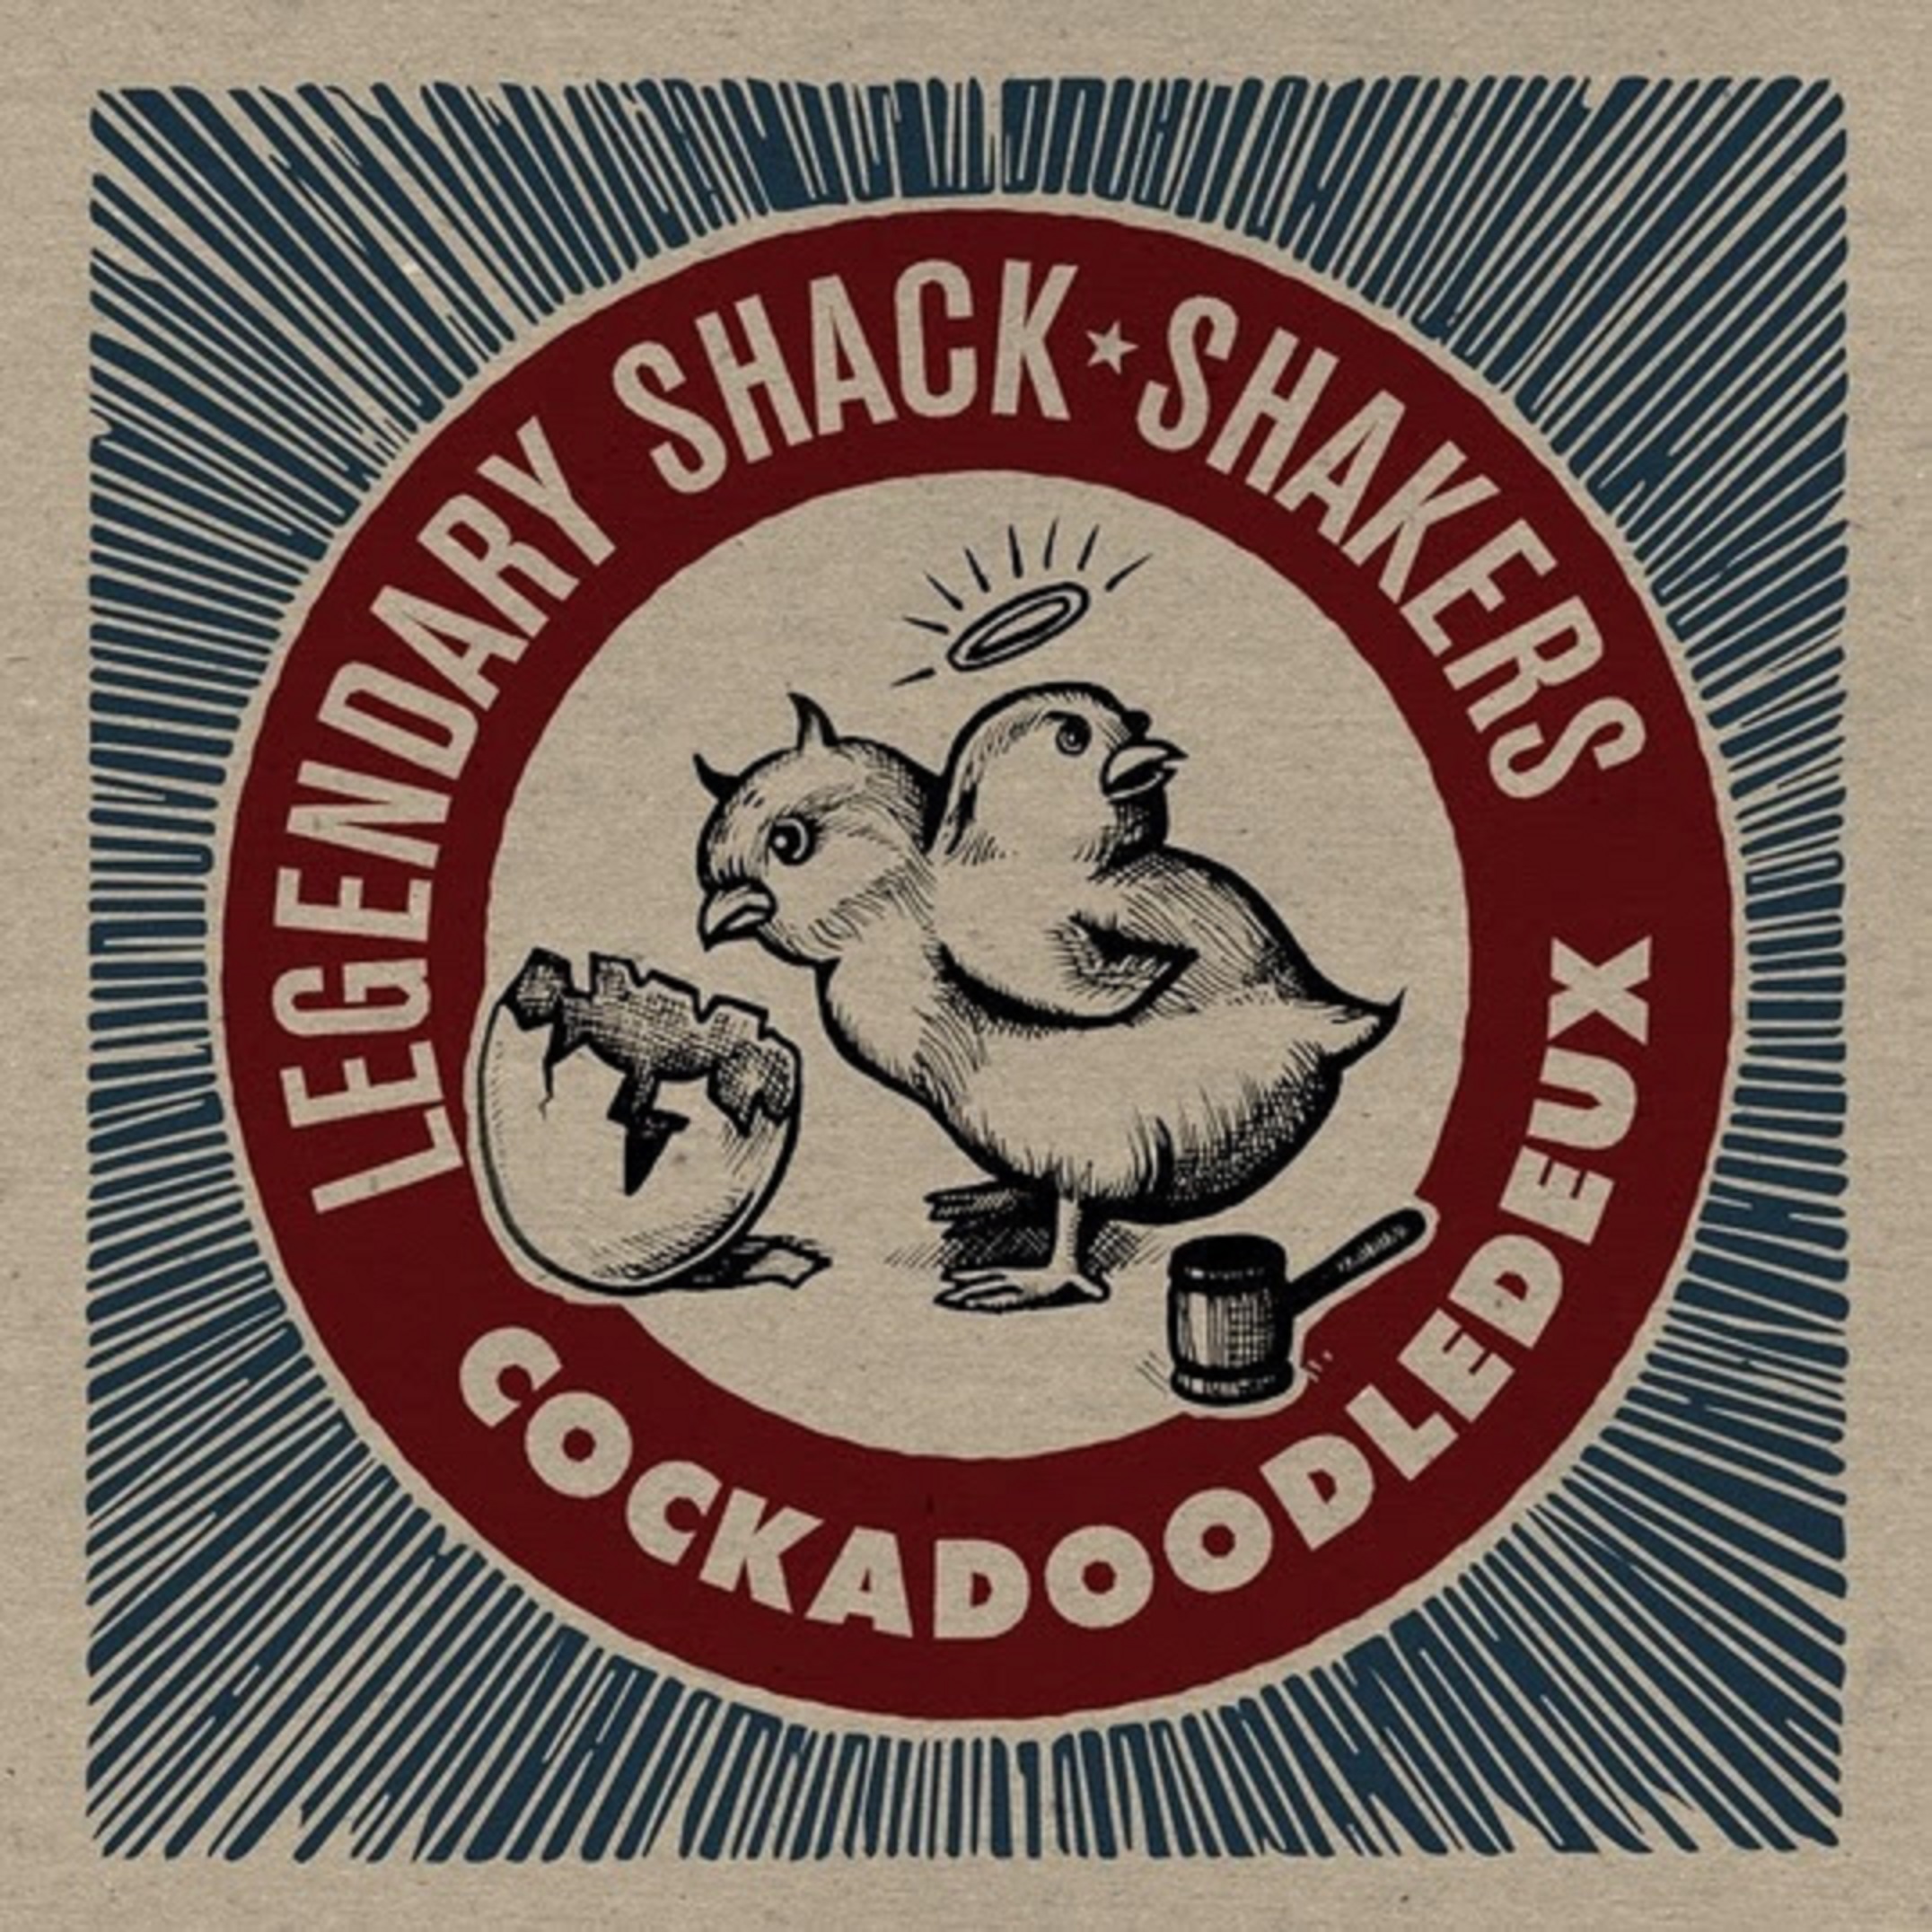 Legendary Shack Shakers New album, 'Cockadoodledeux,' due out November 5th